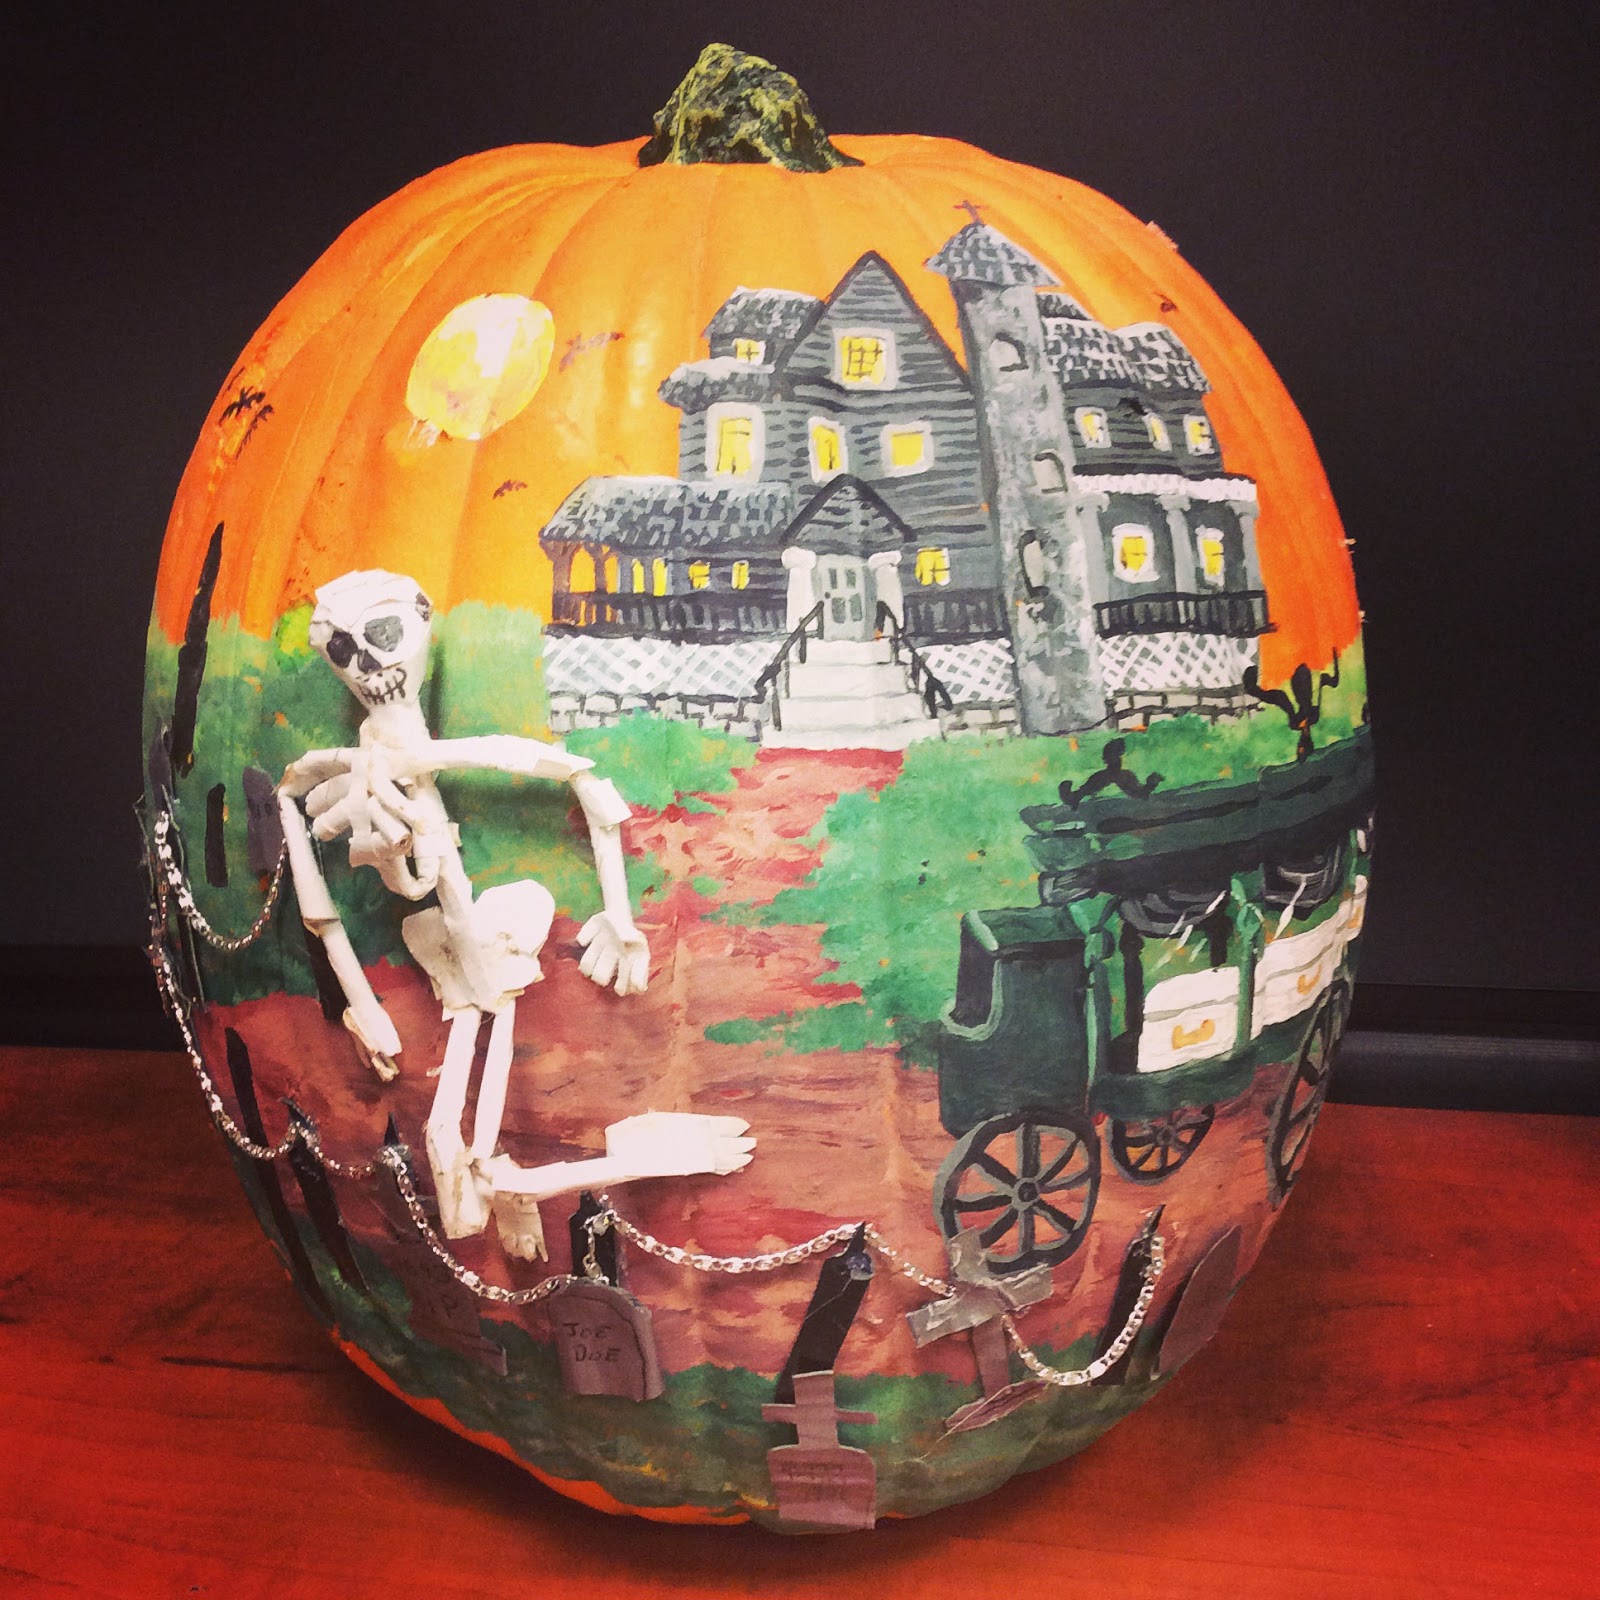 Pumpkin Carving Ideas For Halloween 2020 Jack O Lantern